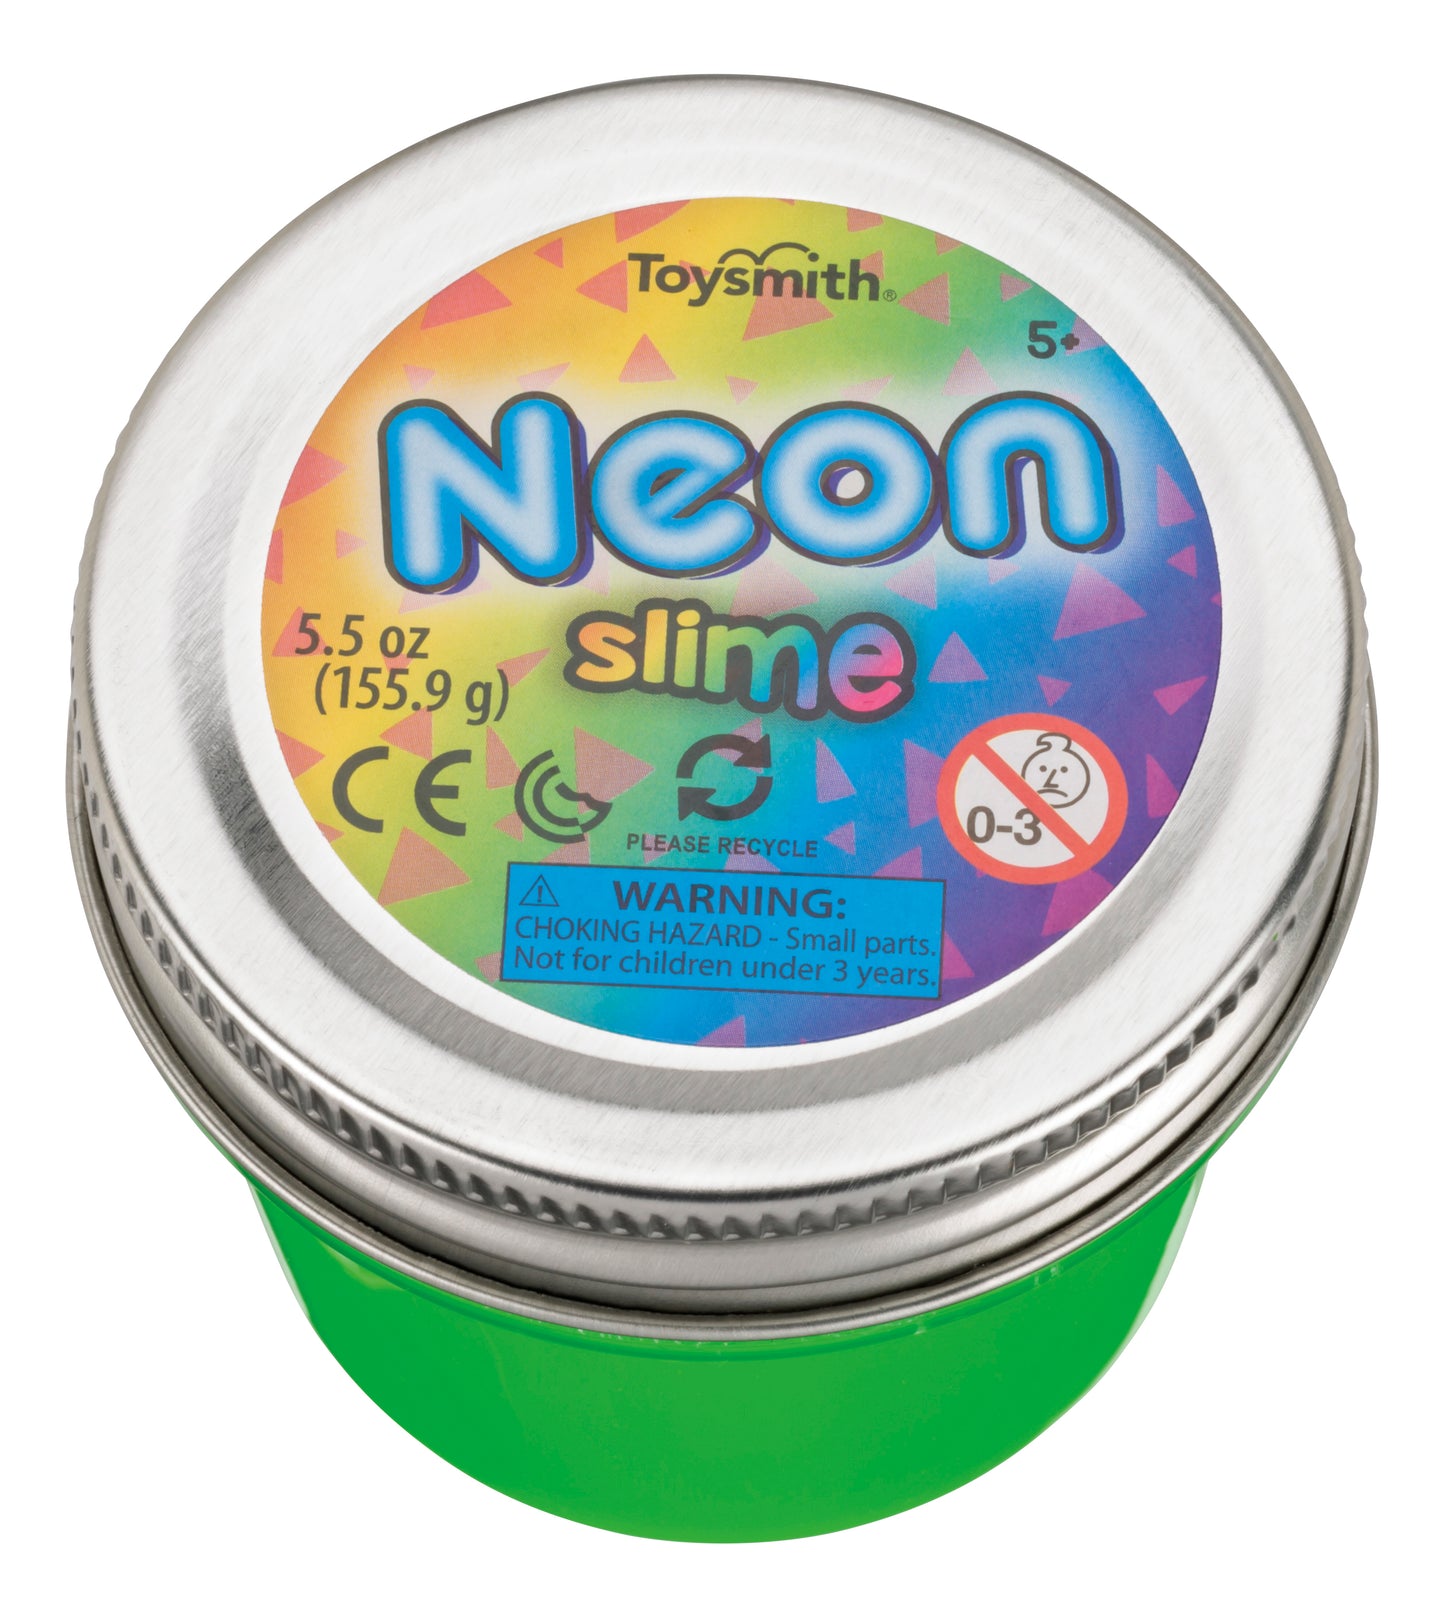 Toysmith Neon Slime